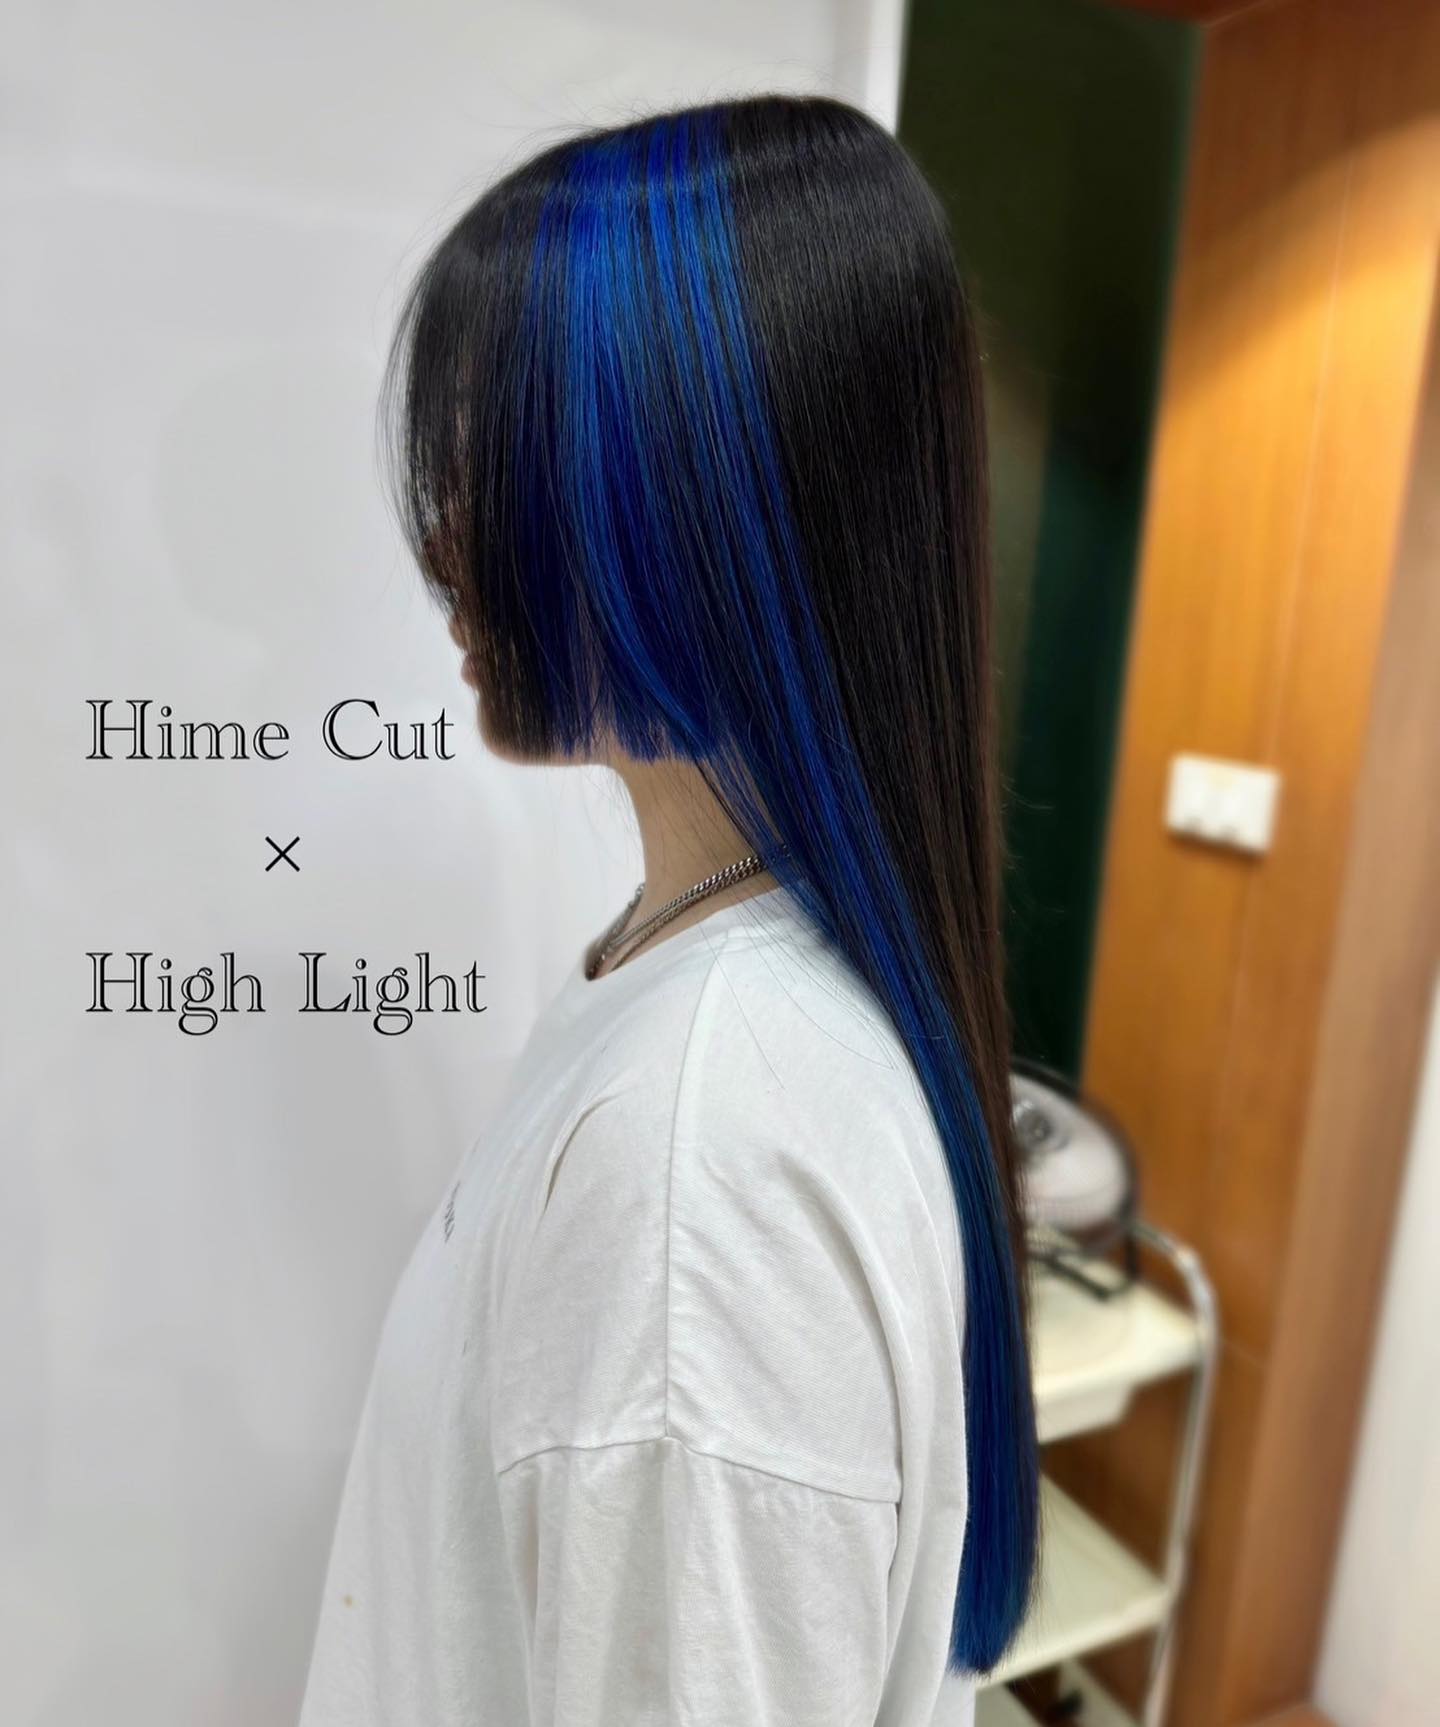 🖤Hime Cut × Blue High light 🖤  Cute and cool 😎  ＊Bleach 3 times and then apply color.  …………………………
ร้าน Hair Room Sora 299/7 ชั้น1, Sukhumvit Living Town, ซอยสุขุมวิท21(อโศก)
️ 02-169-1622
 Line : @575zzlqc (มี @)
️** บัตรเครดิตขั้นต่ำ 2000 บาท **
#Hairroomsora #Hairroomsorabangkok #🤖 #Hairstyle #sukhumvit21 #Japanesesalon #DigitalPerm #バンコク美容院 #ヘアールームソラ #head spa bangkok #fashioncolor #ร้านซาลอนญี่ปุ่น #ซาลอน #ทำผมรับปริญญา #ทำผมออกงาน #รับทำผม #ดัดดิจิตอล #ยืดผม #ย้อมผม #Repost